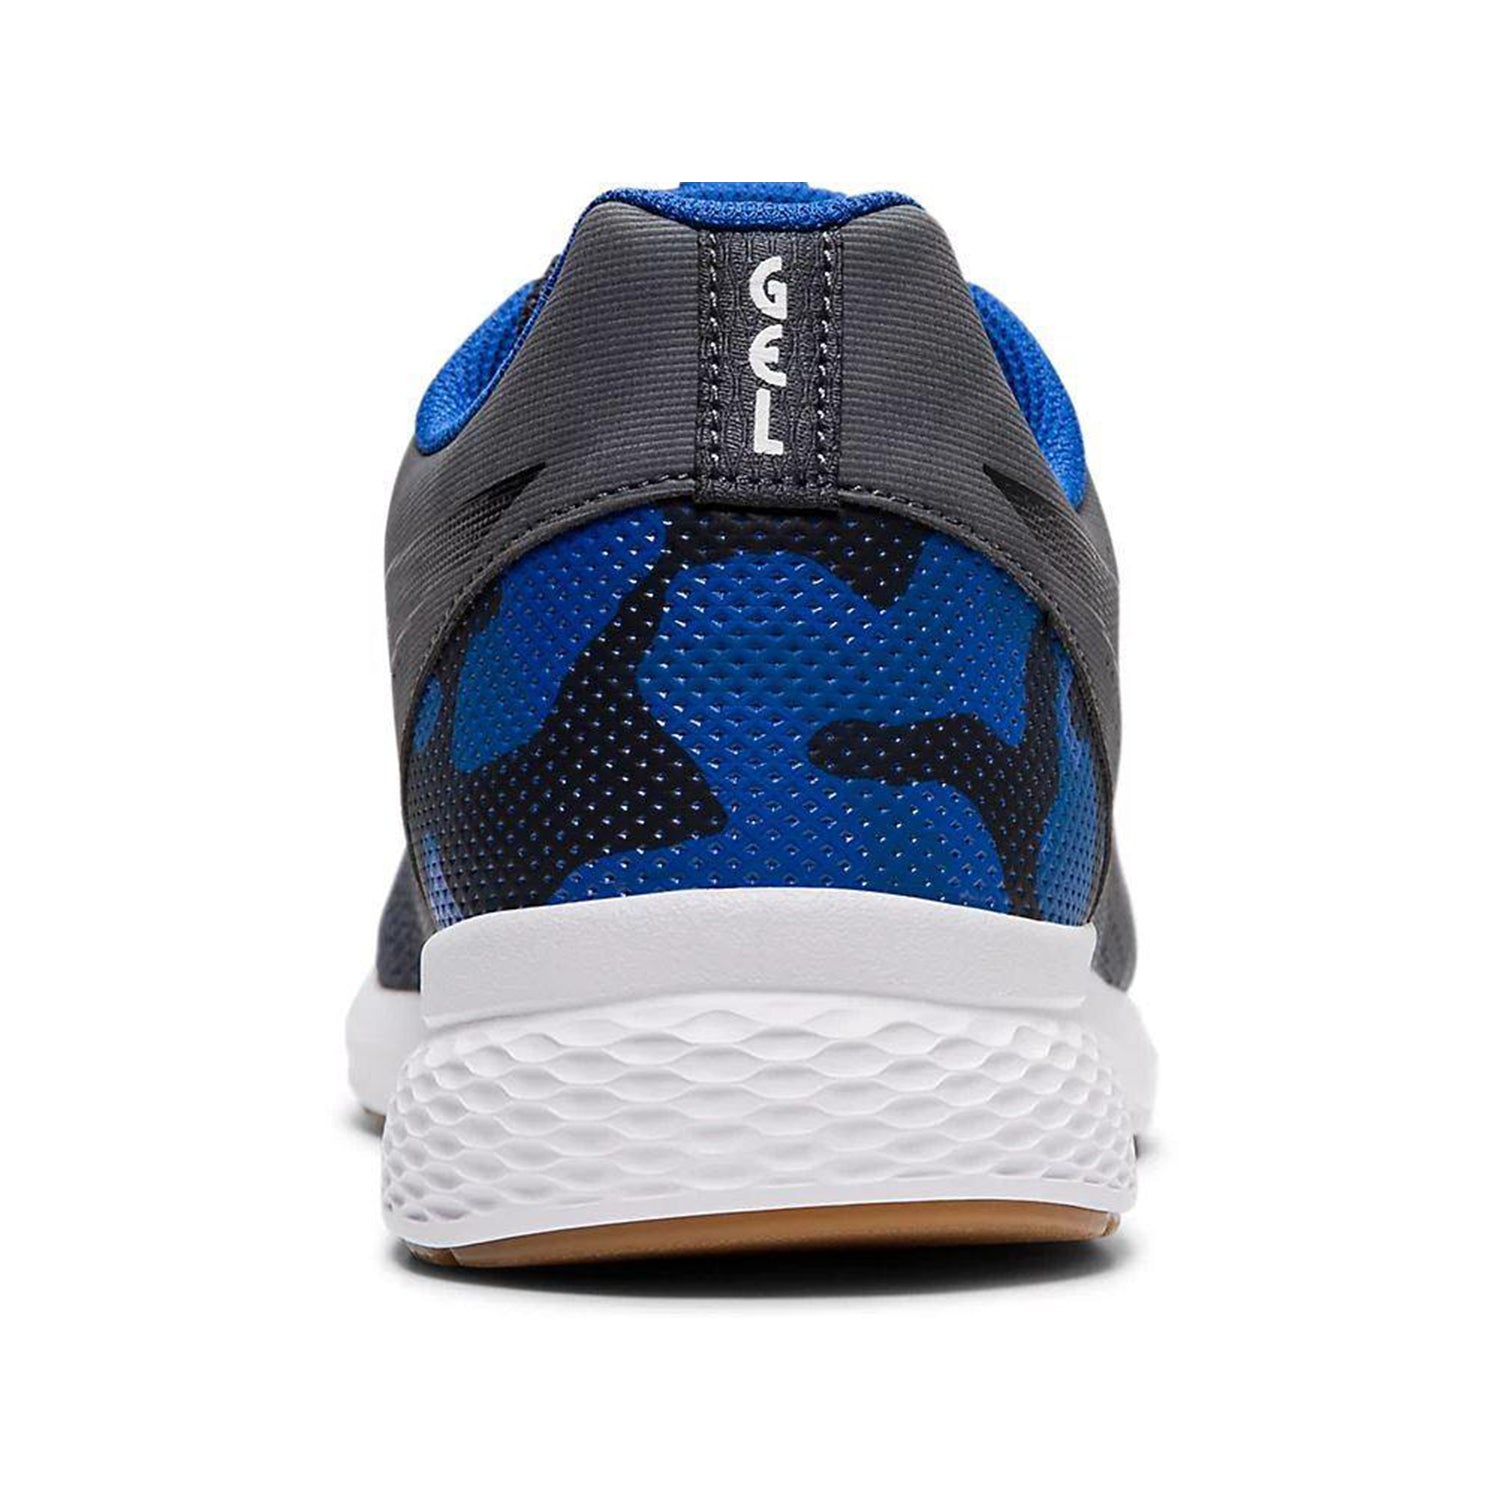 Asics Gel Torrance 2 Men's Running Shoes - Grey/Black - Best Price online Prokicksports.com